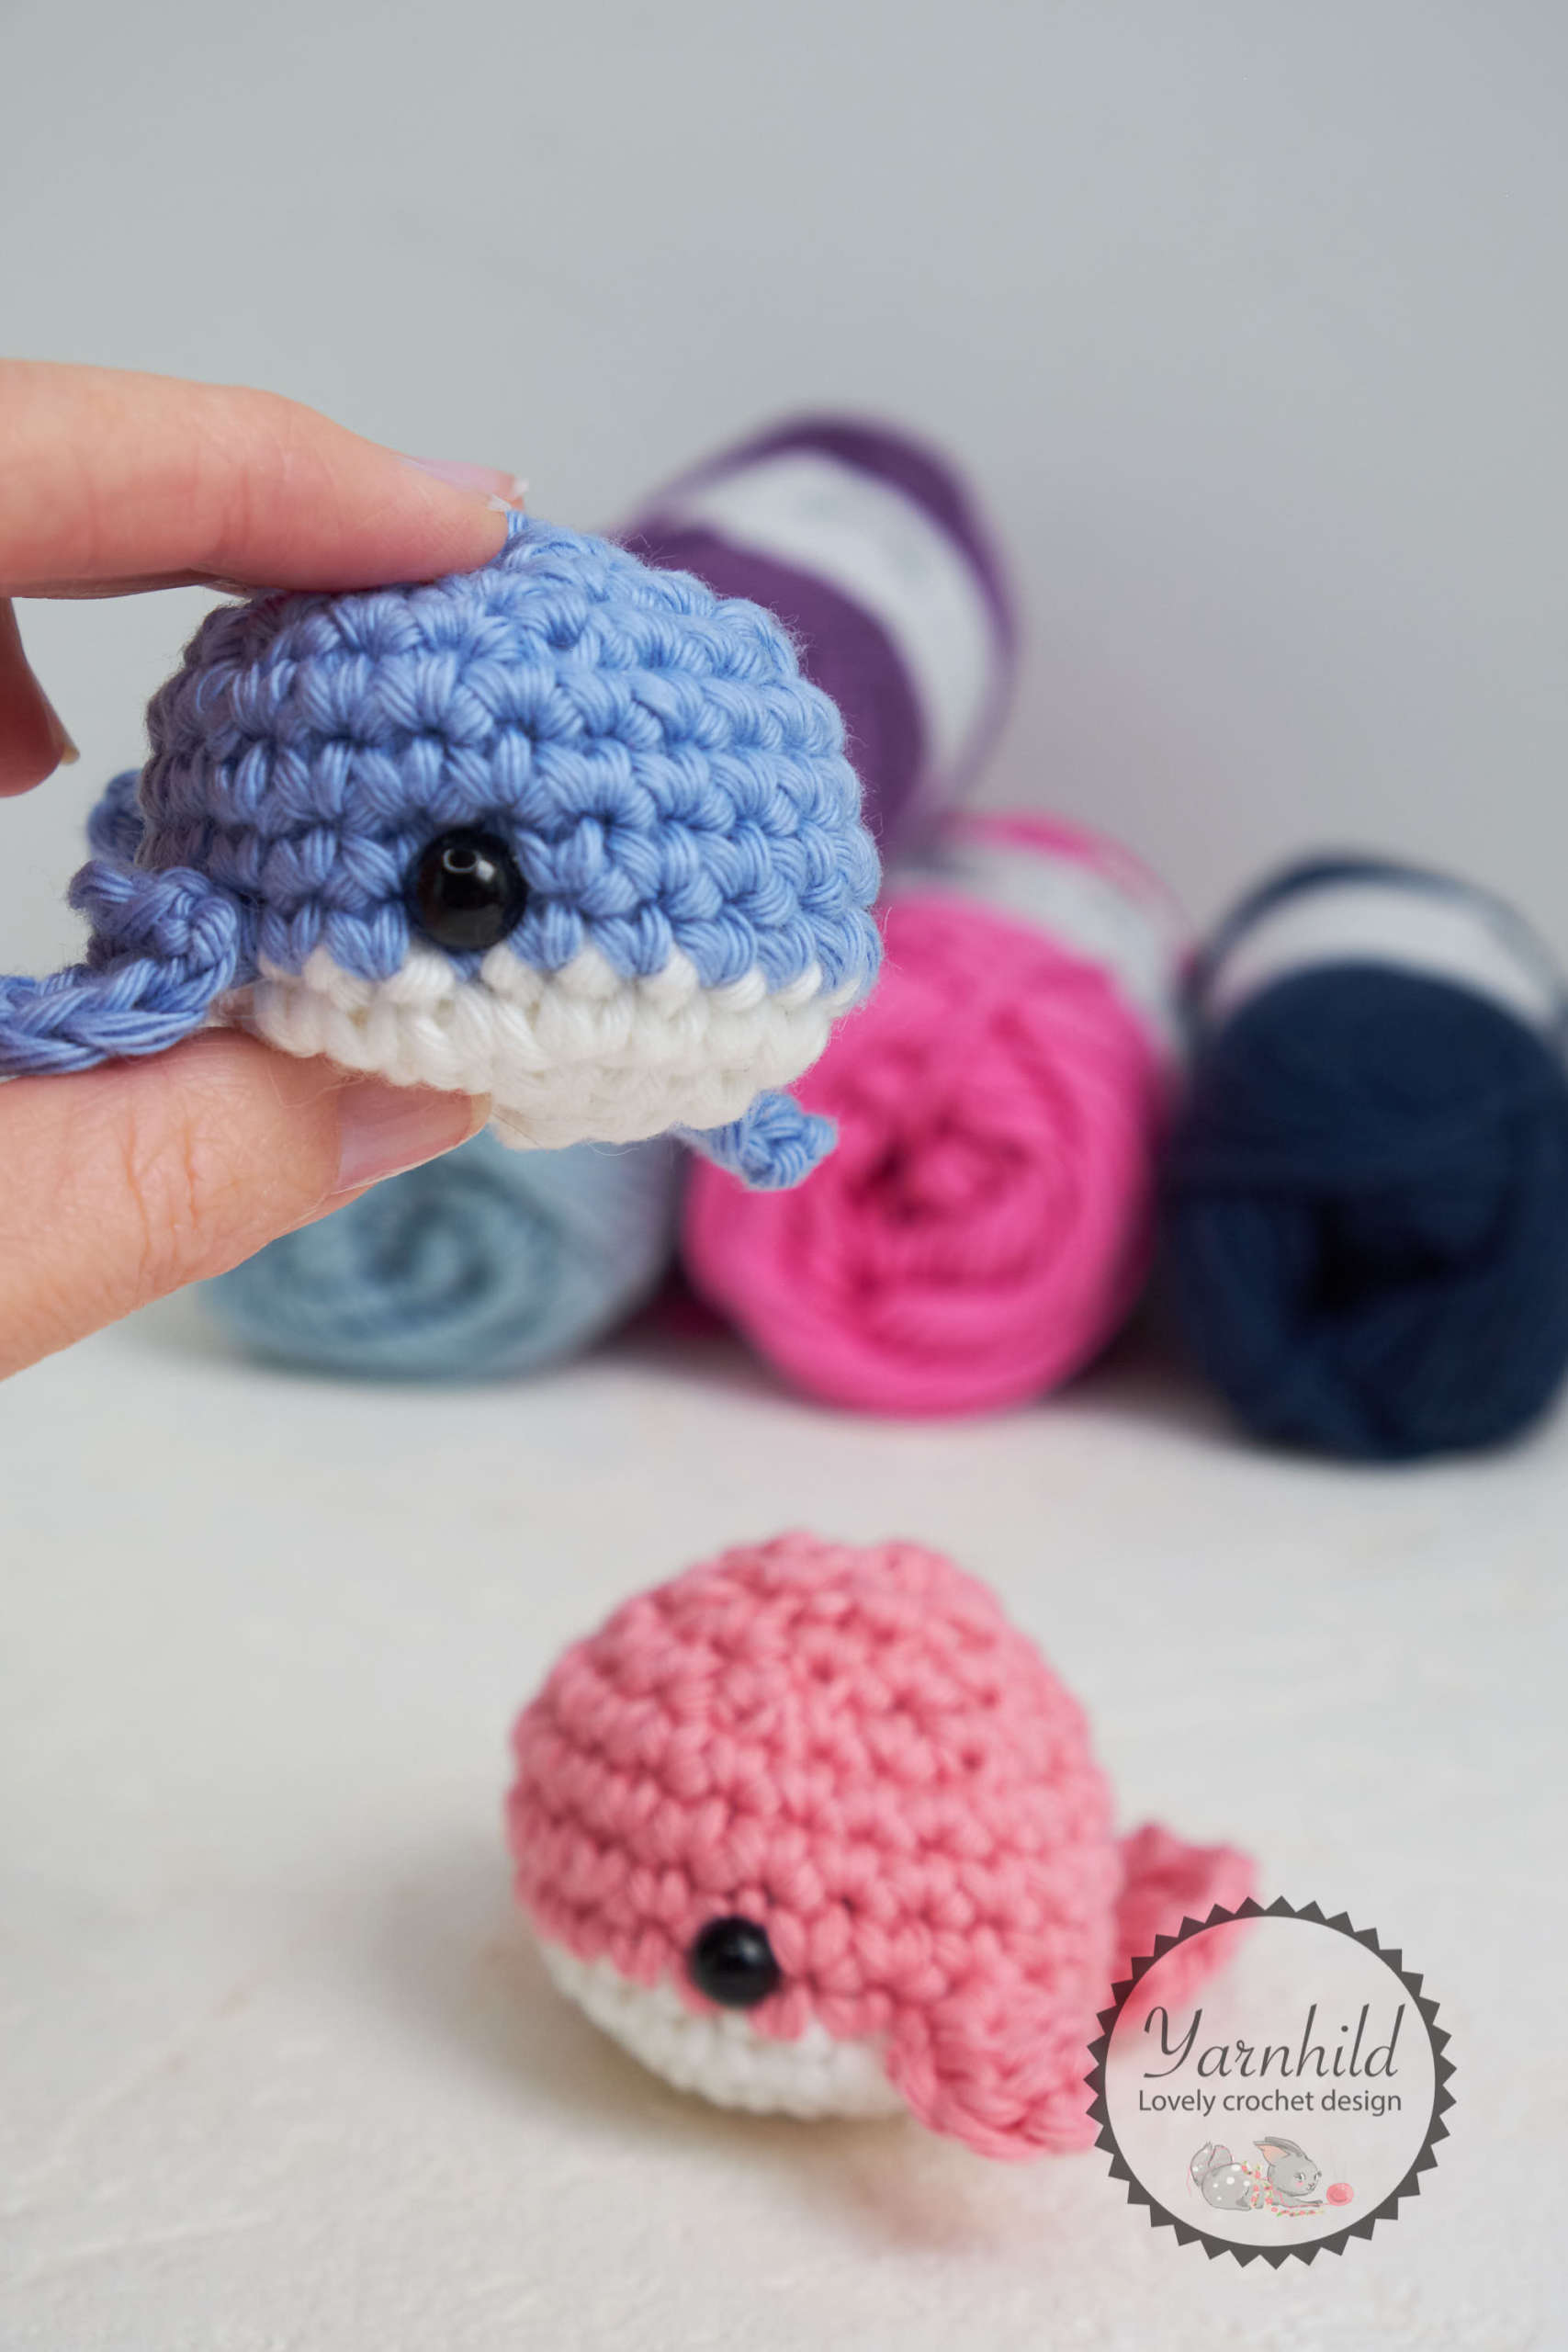 Animals To Crochet Using Chunky Yarn: Easy Crochet Animal Patterns